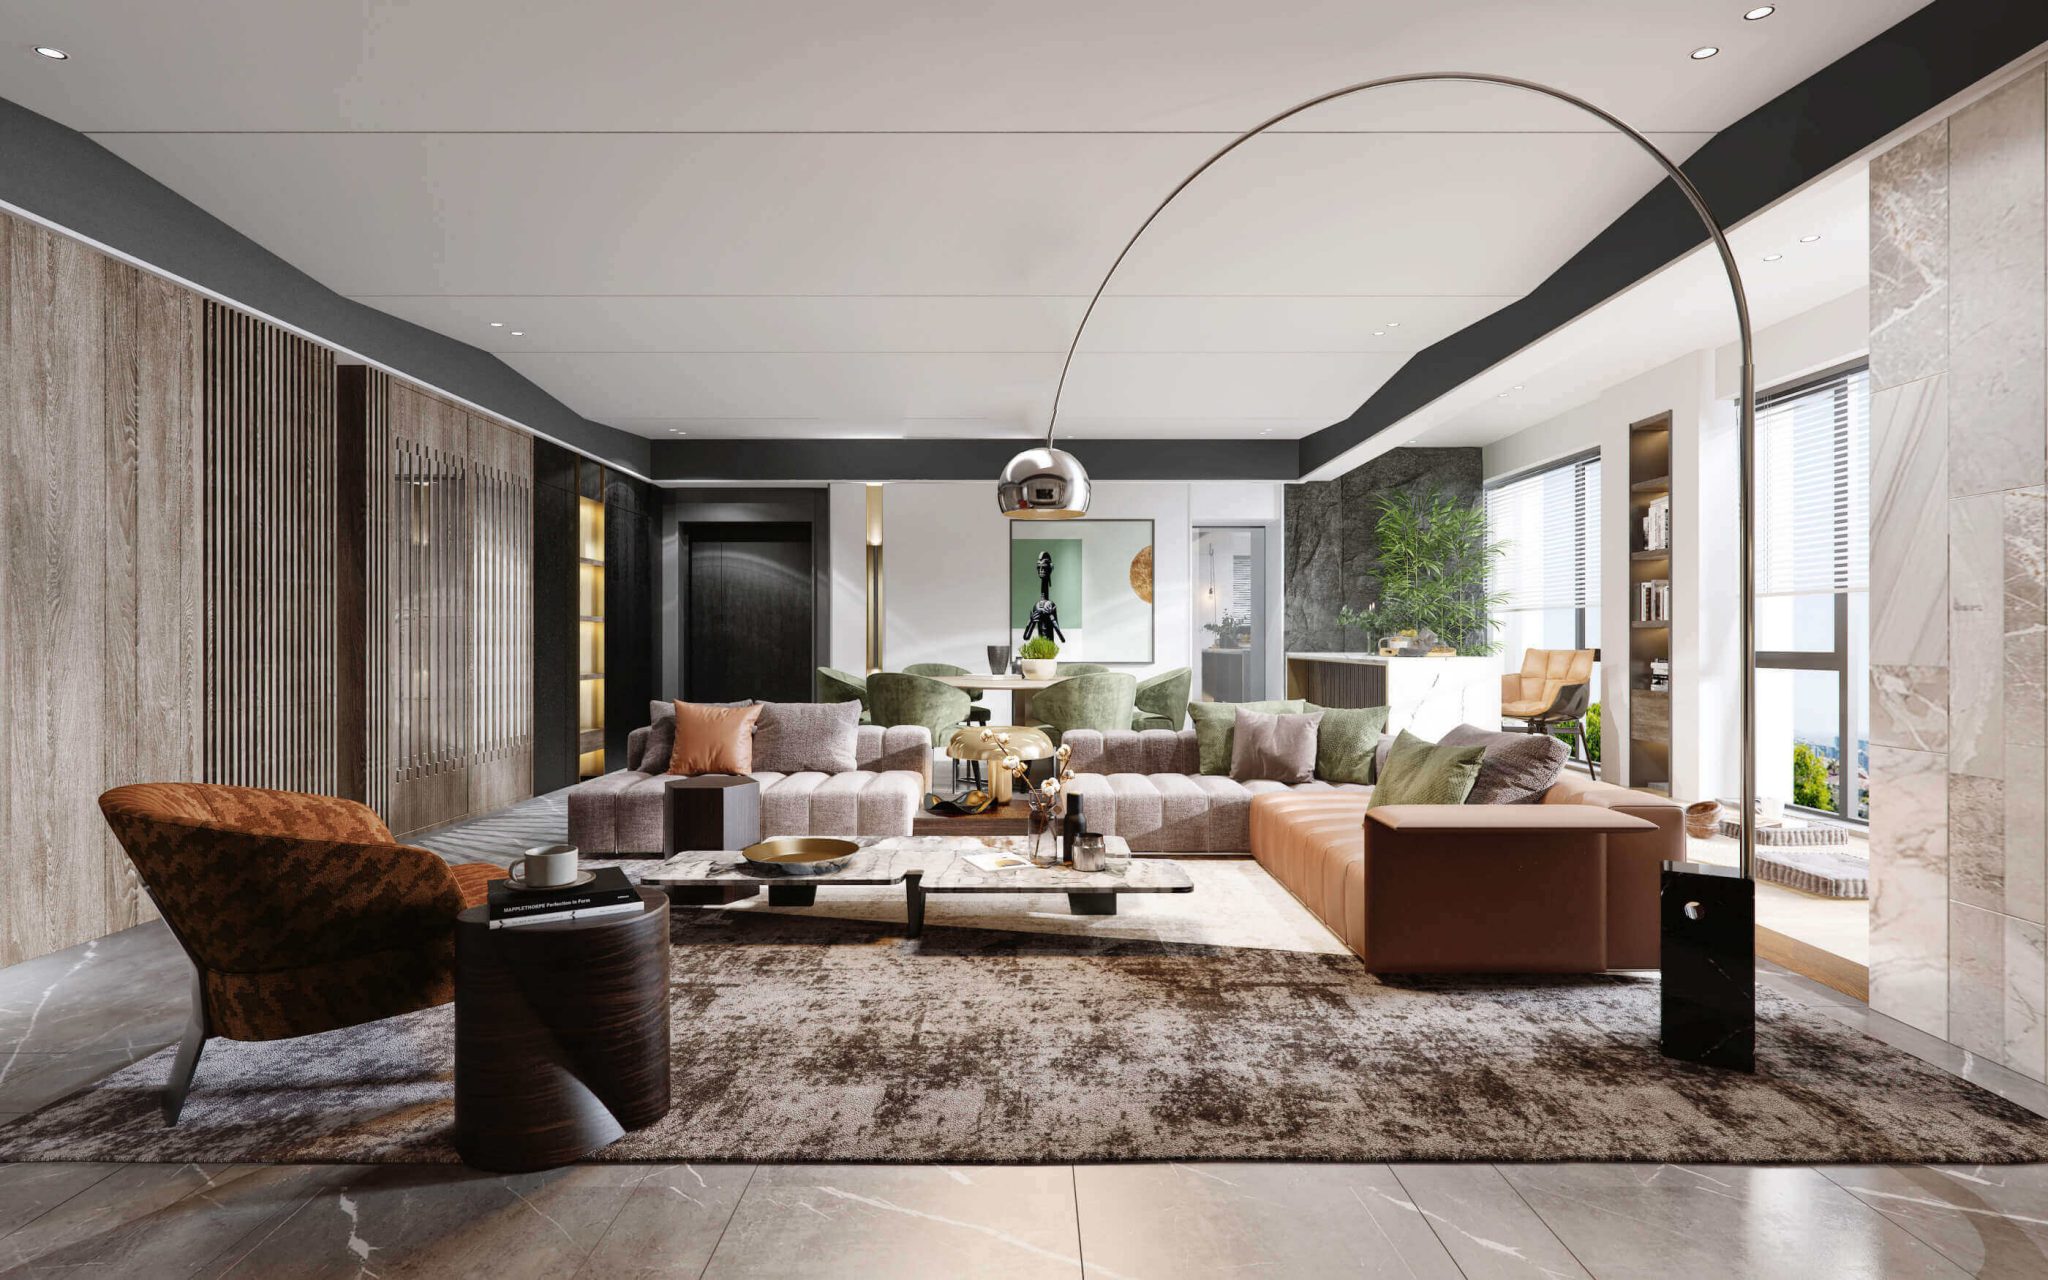 Living Room Design Idea丨the High Level Sense Of Minimalist Space In 2020